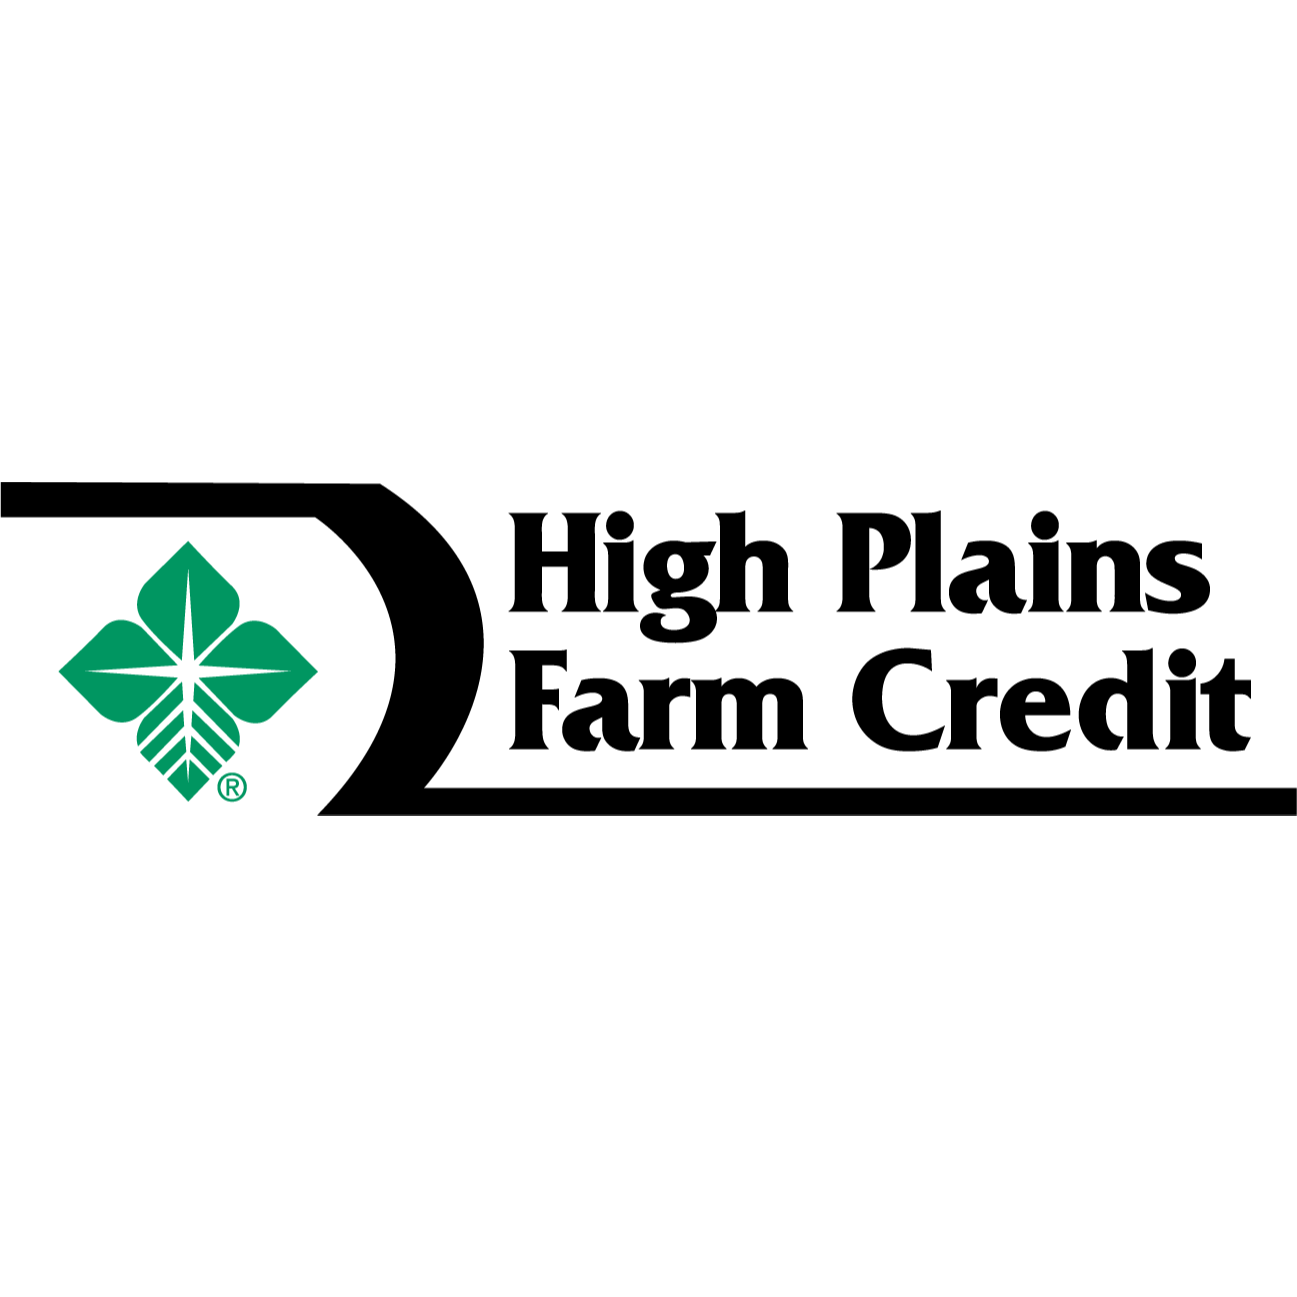 High Plains Farm Credit - Norton, KS 67654 - (785)533-1036 | ShowMeLocal.com